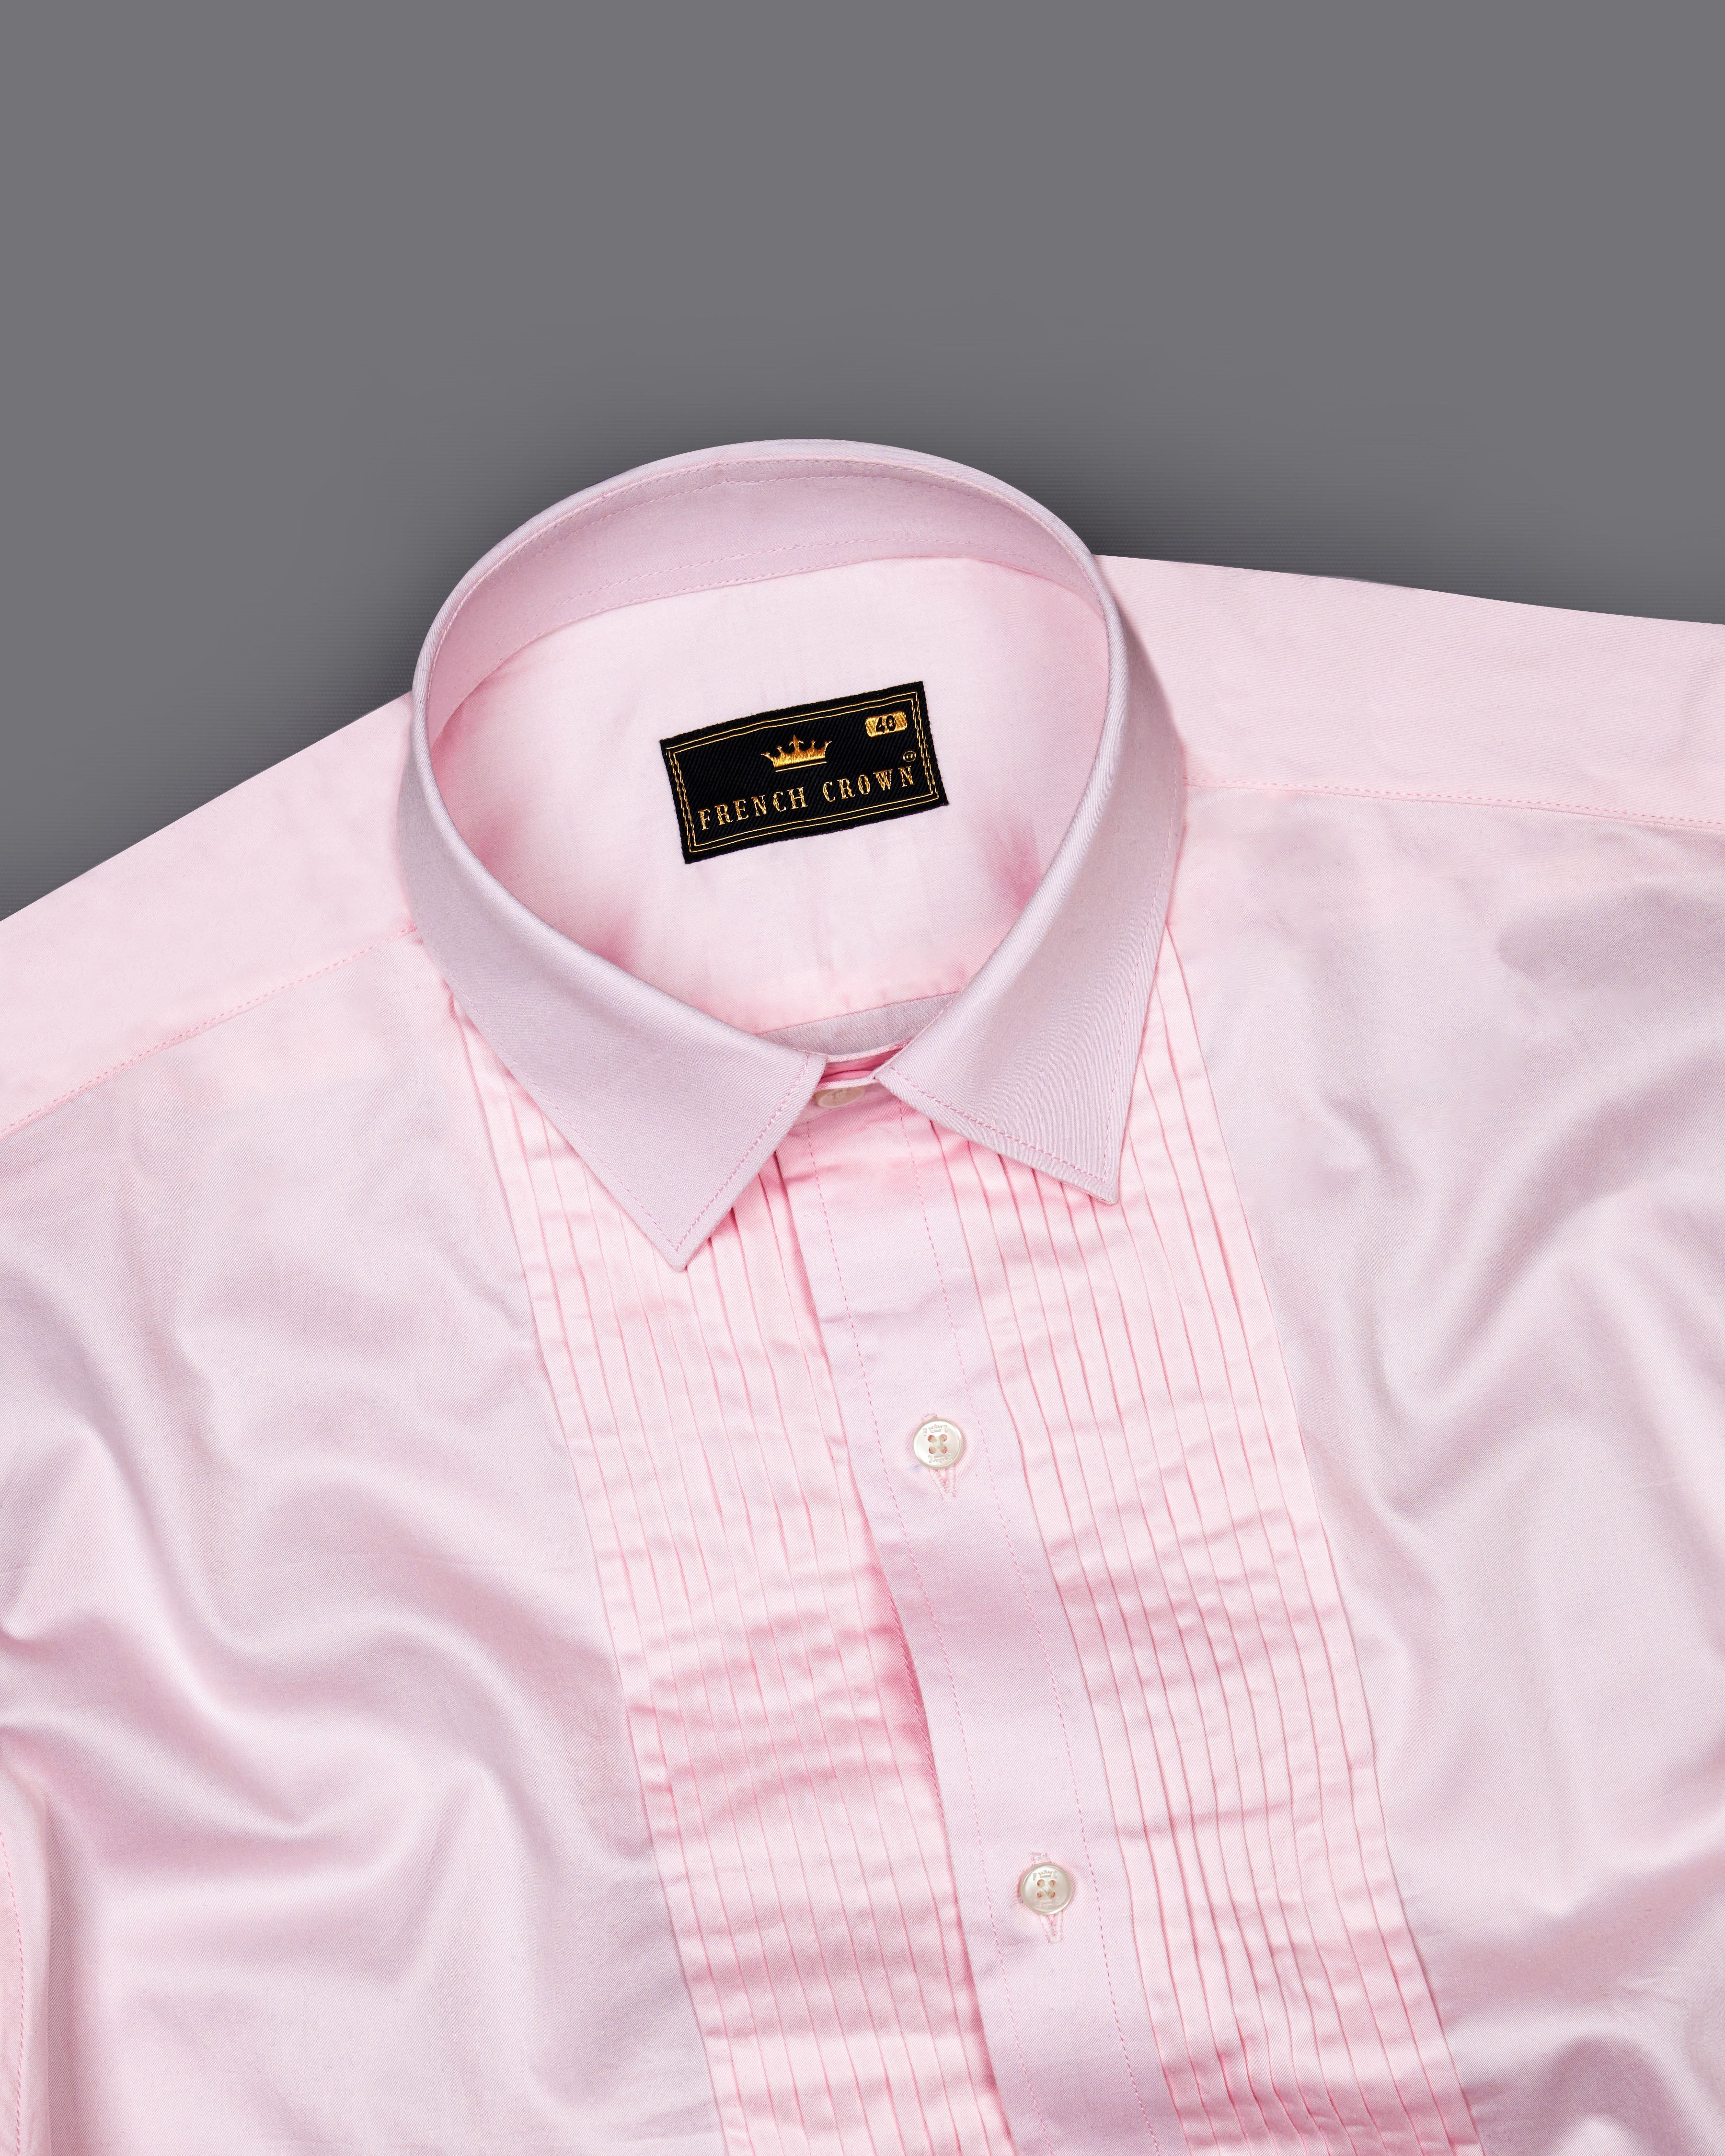 Carousel Pink Subtle Sheen Snake Pleated Super Soft Premium Cotton Tuxedo Shirt 8686-TXD-38, 8686-TXD-H-38, 8686-TXD-39, 8686-TXD-H-39, 8686-TXD-40, 8686-TXD-H-40, 8686-TXD-42, 8686-TXD-H-42, 8686-TXD-44, 8686-TXD-H-44, 8686-TXD-46, 8686-TXD-H-46, 8686-TXD-48, 8686-TXD-H-48, 8686-TXD-50, 8686-TXD-H-50, 8686-TXD-52, 8686-TXD-H-52